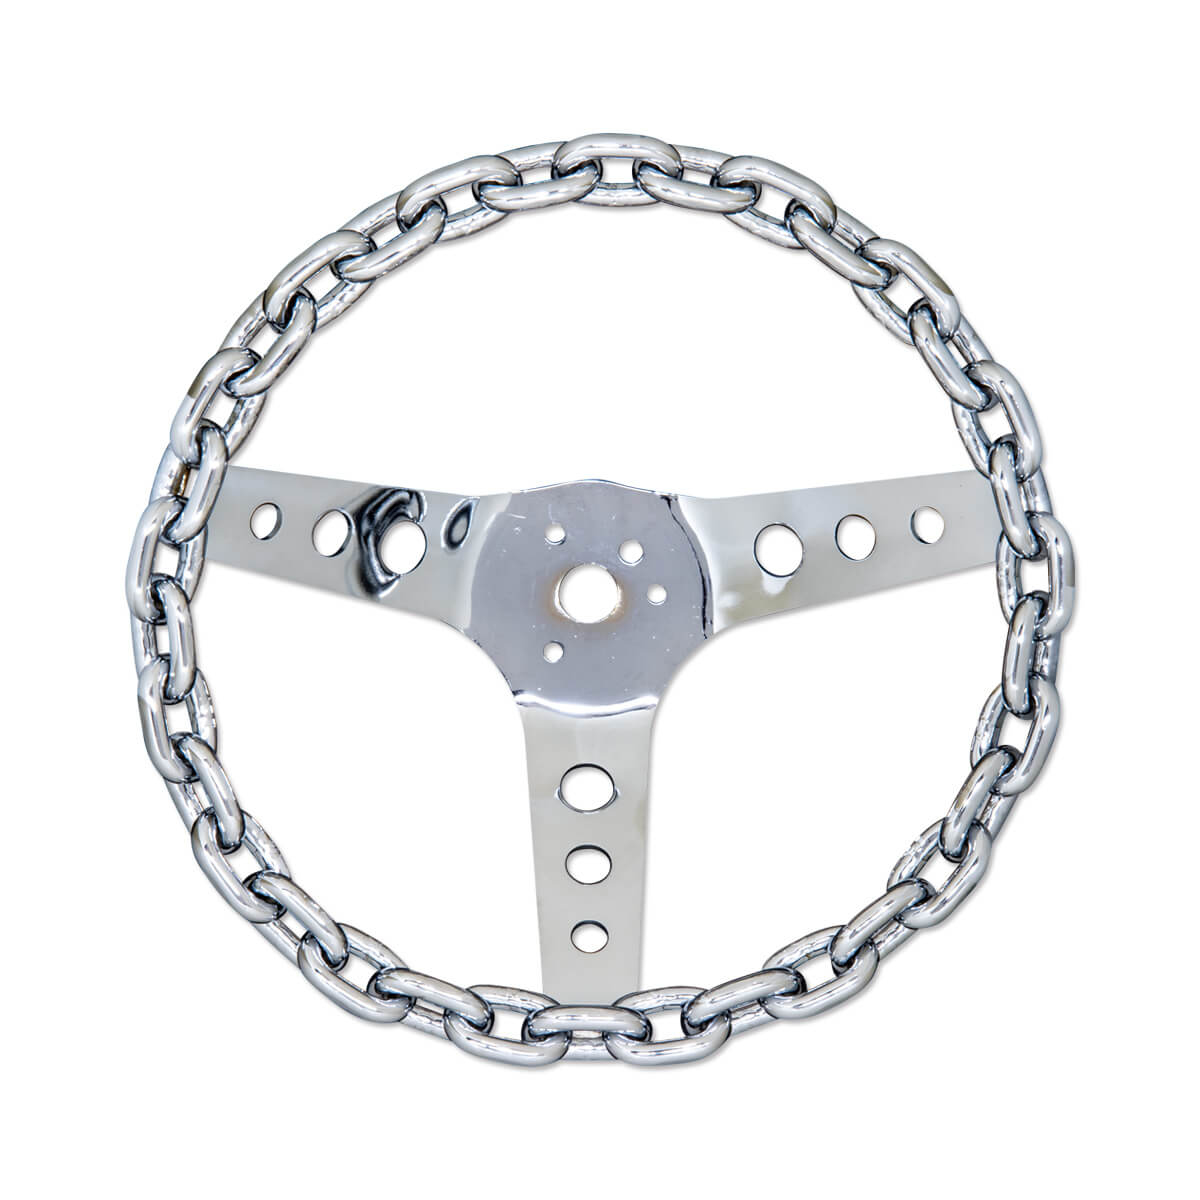 Photo1: Chain 3 Spoke 11" Chrome Steering Wheel (1)